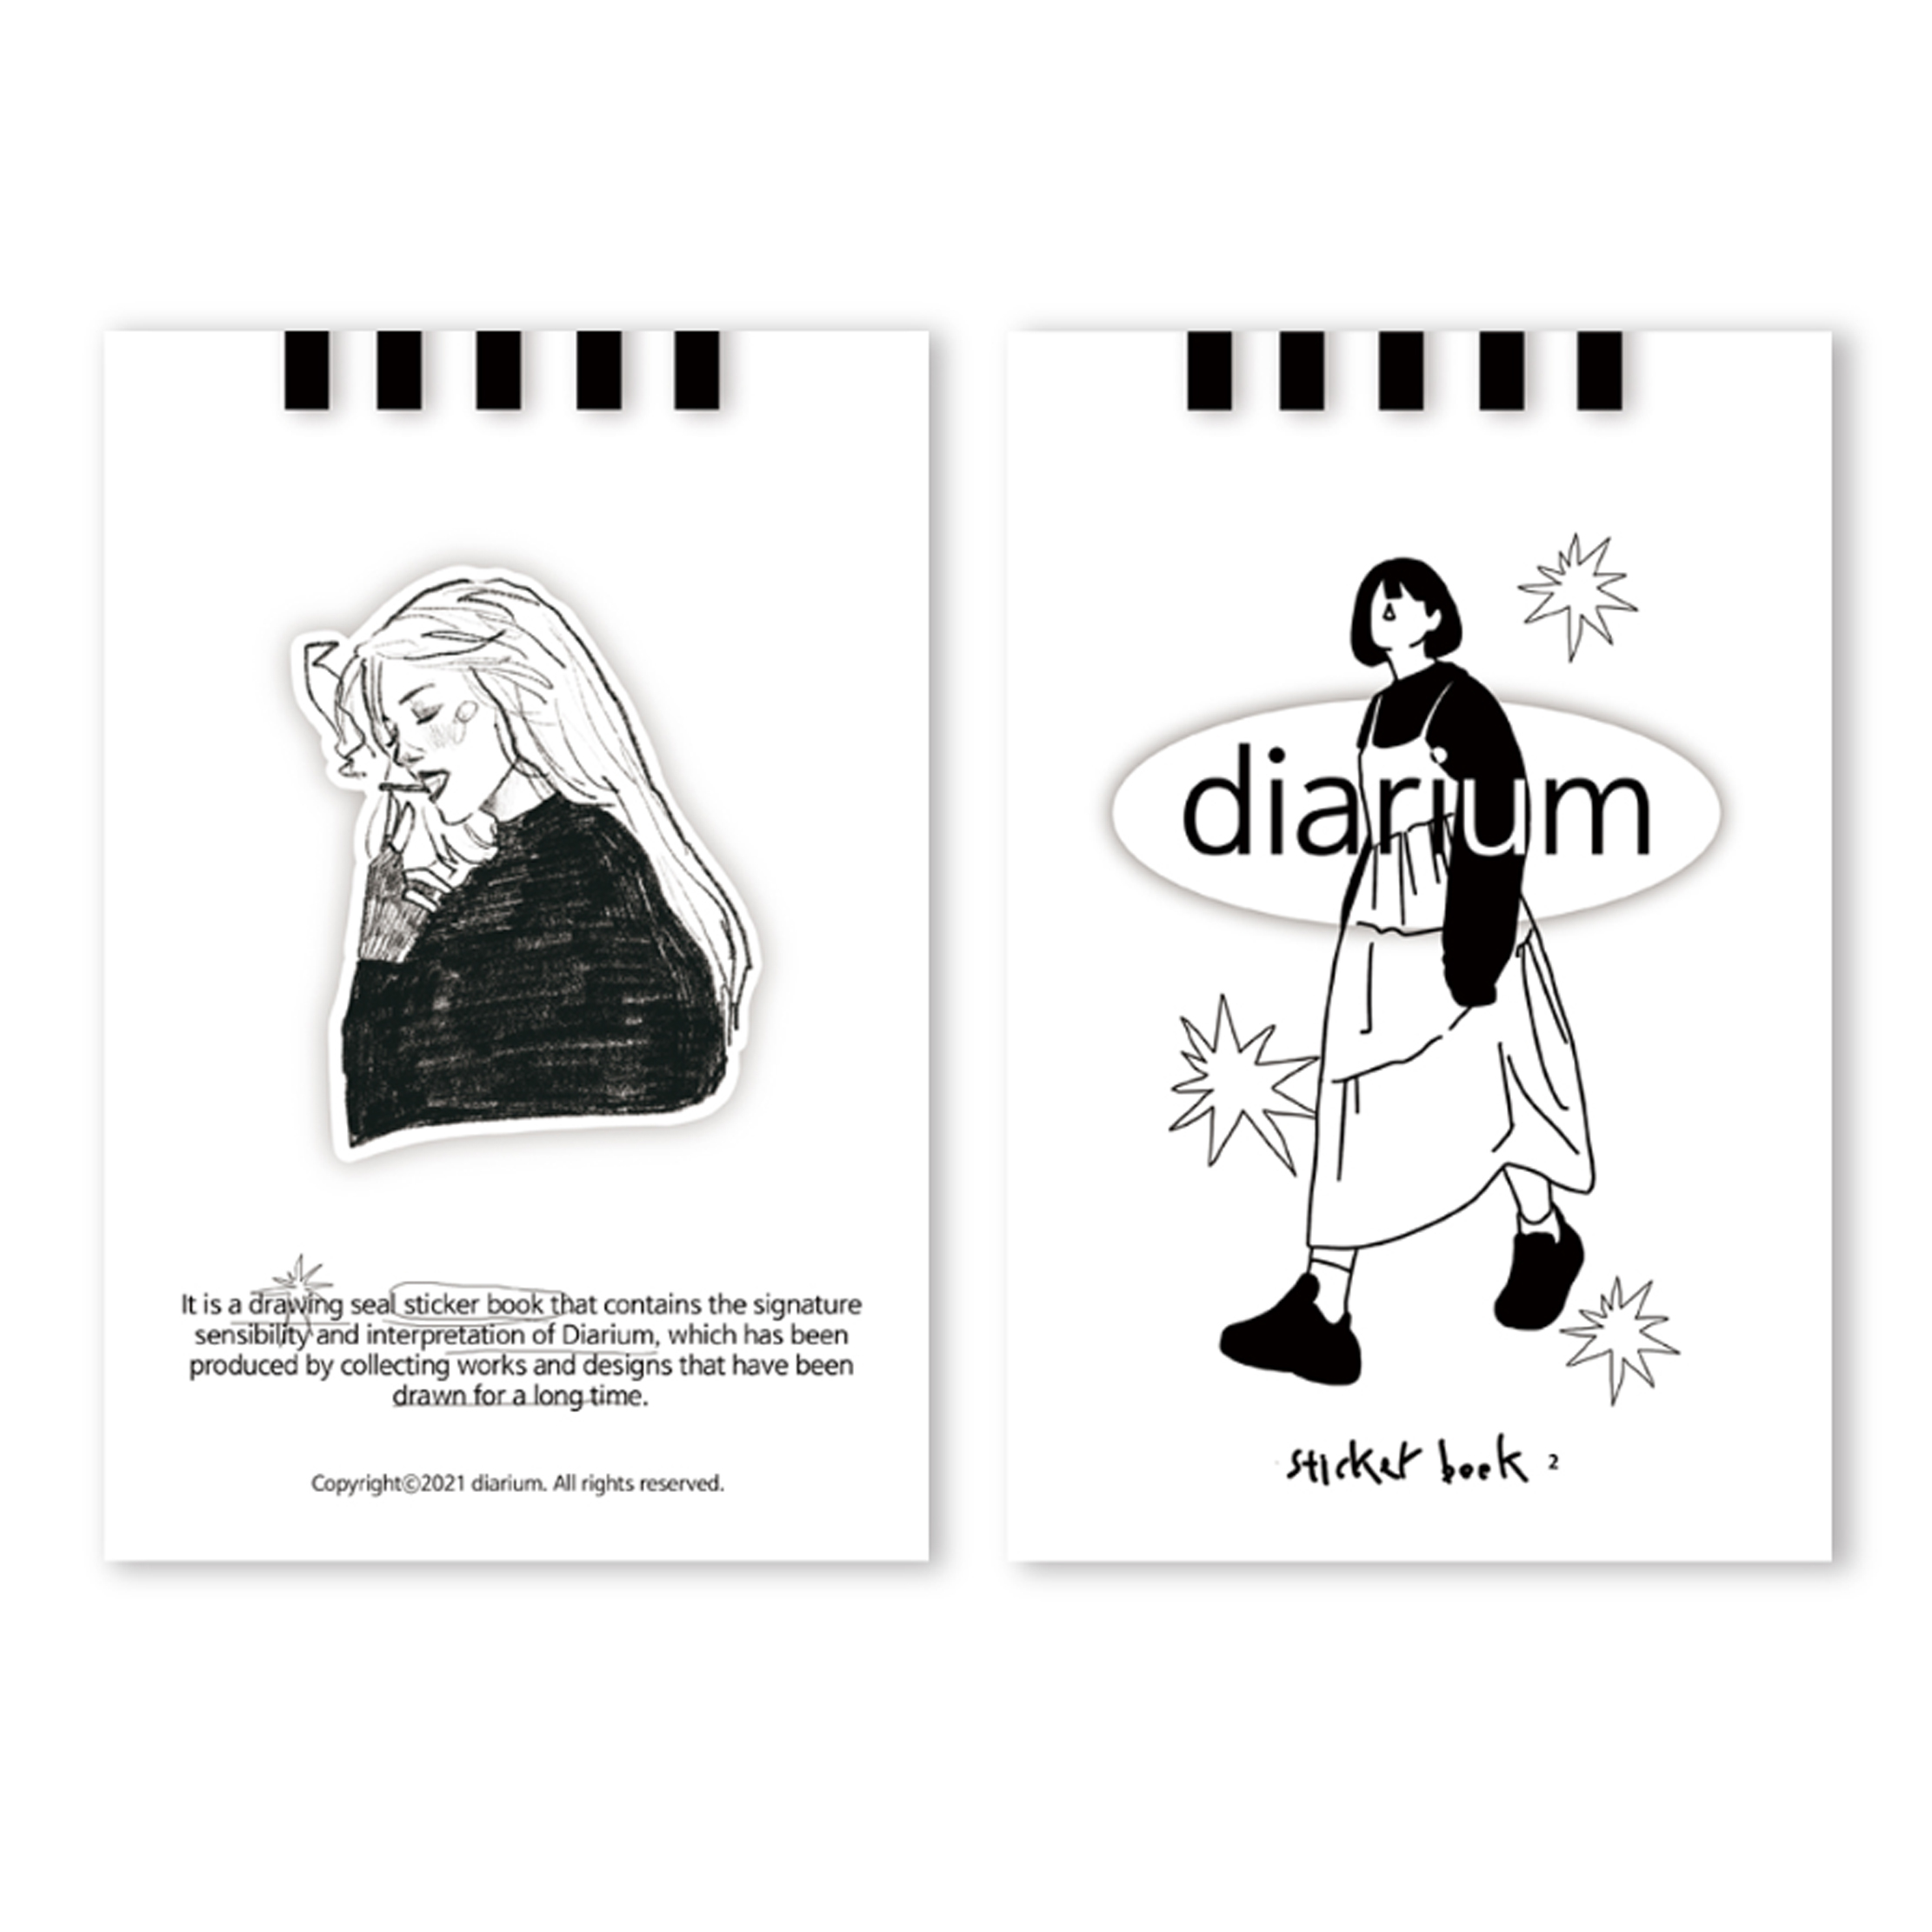 diarium draw sticker book 2